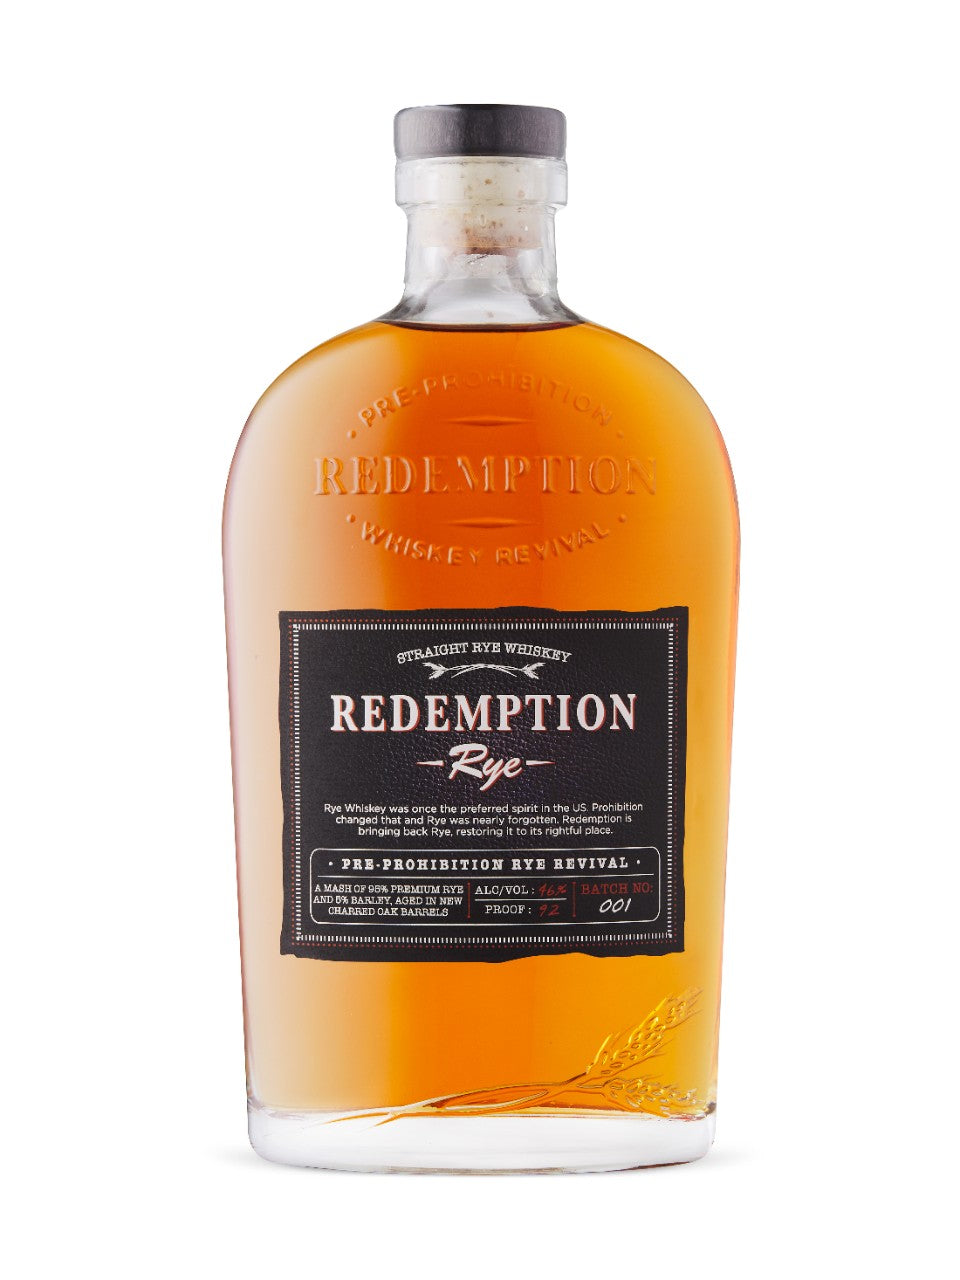 Redemption Rye Whiskey 750 mL bottle